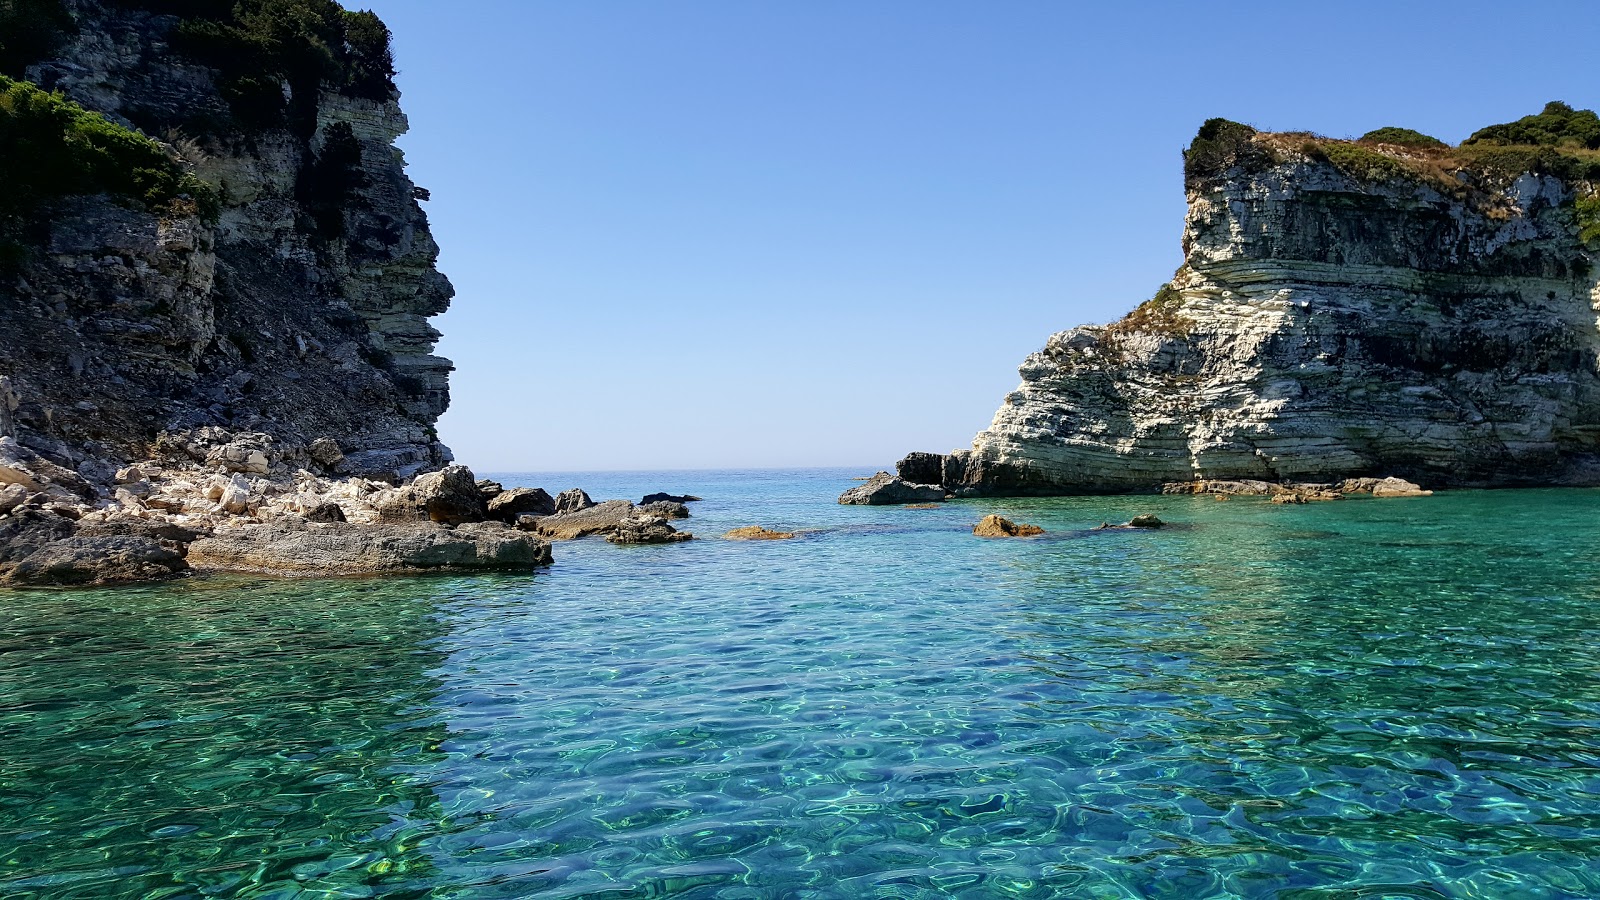 Photo of Antipaxos Bay and its beautiful scenery